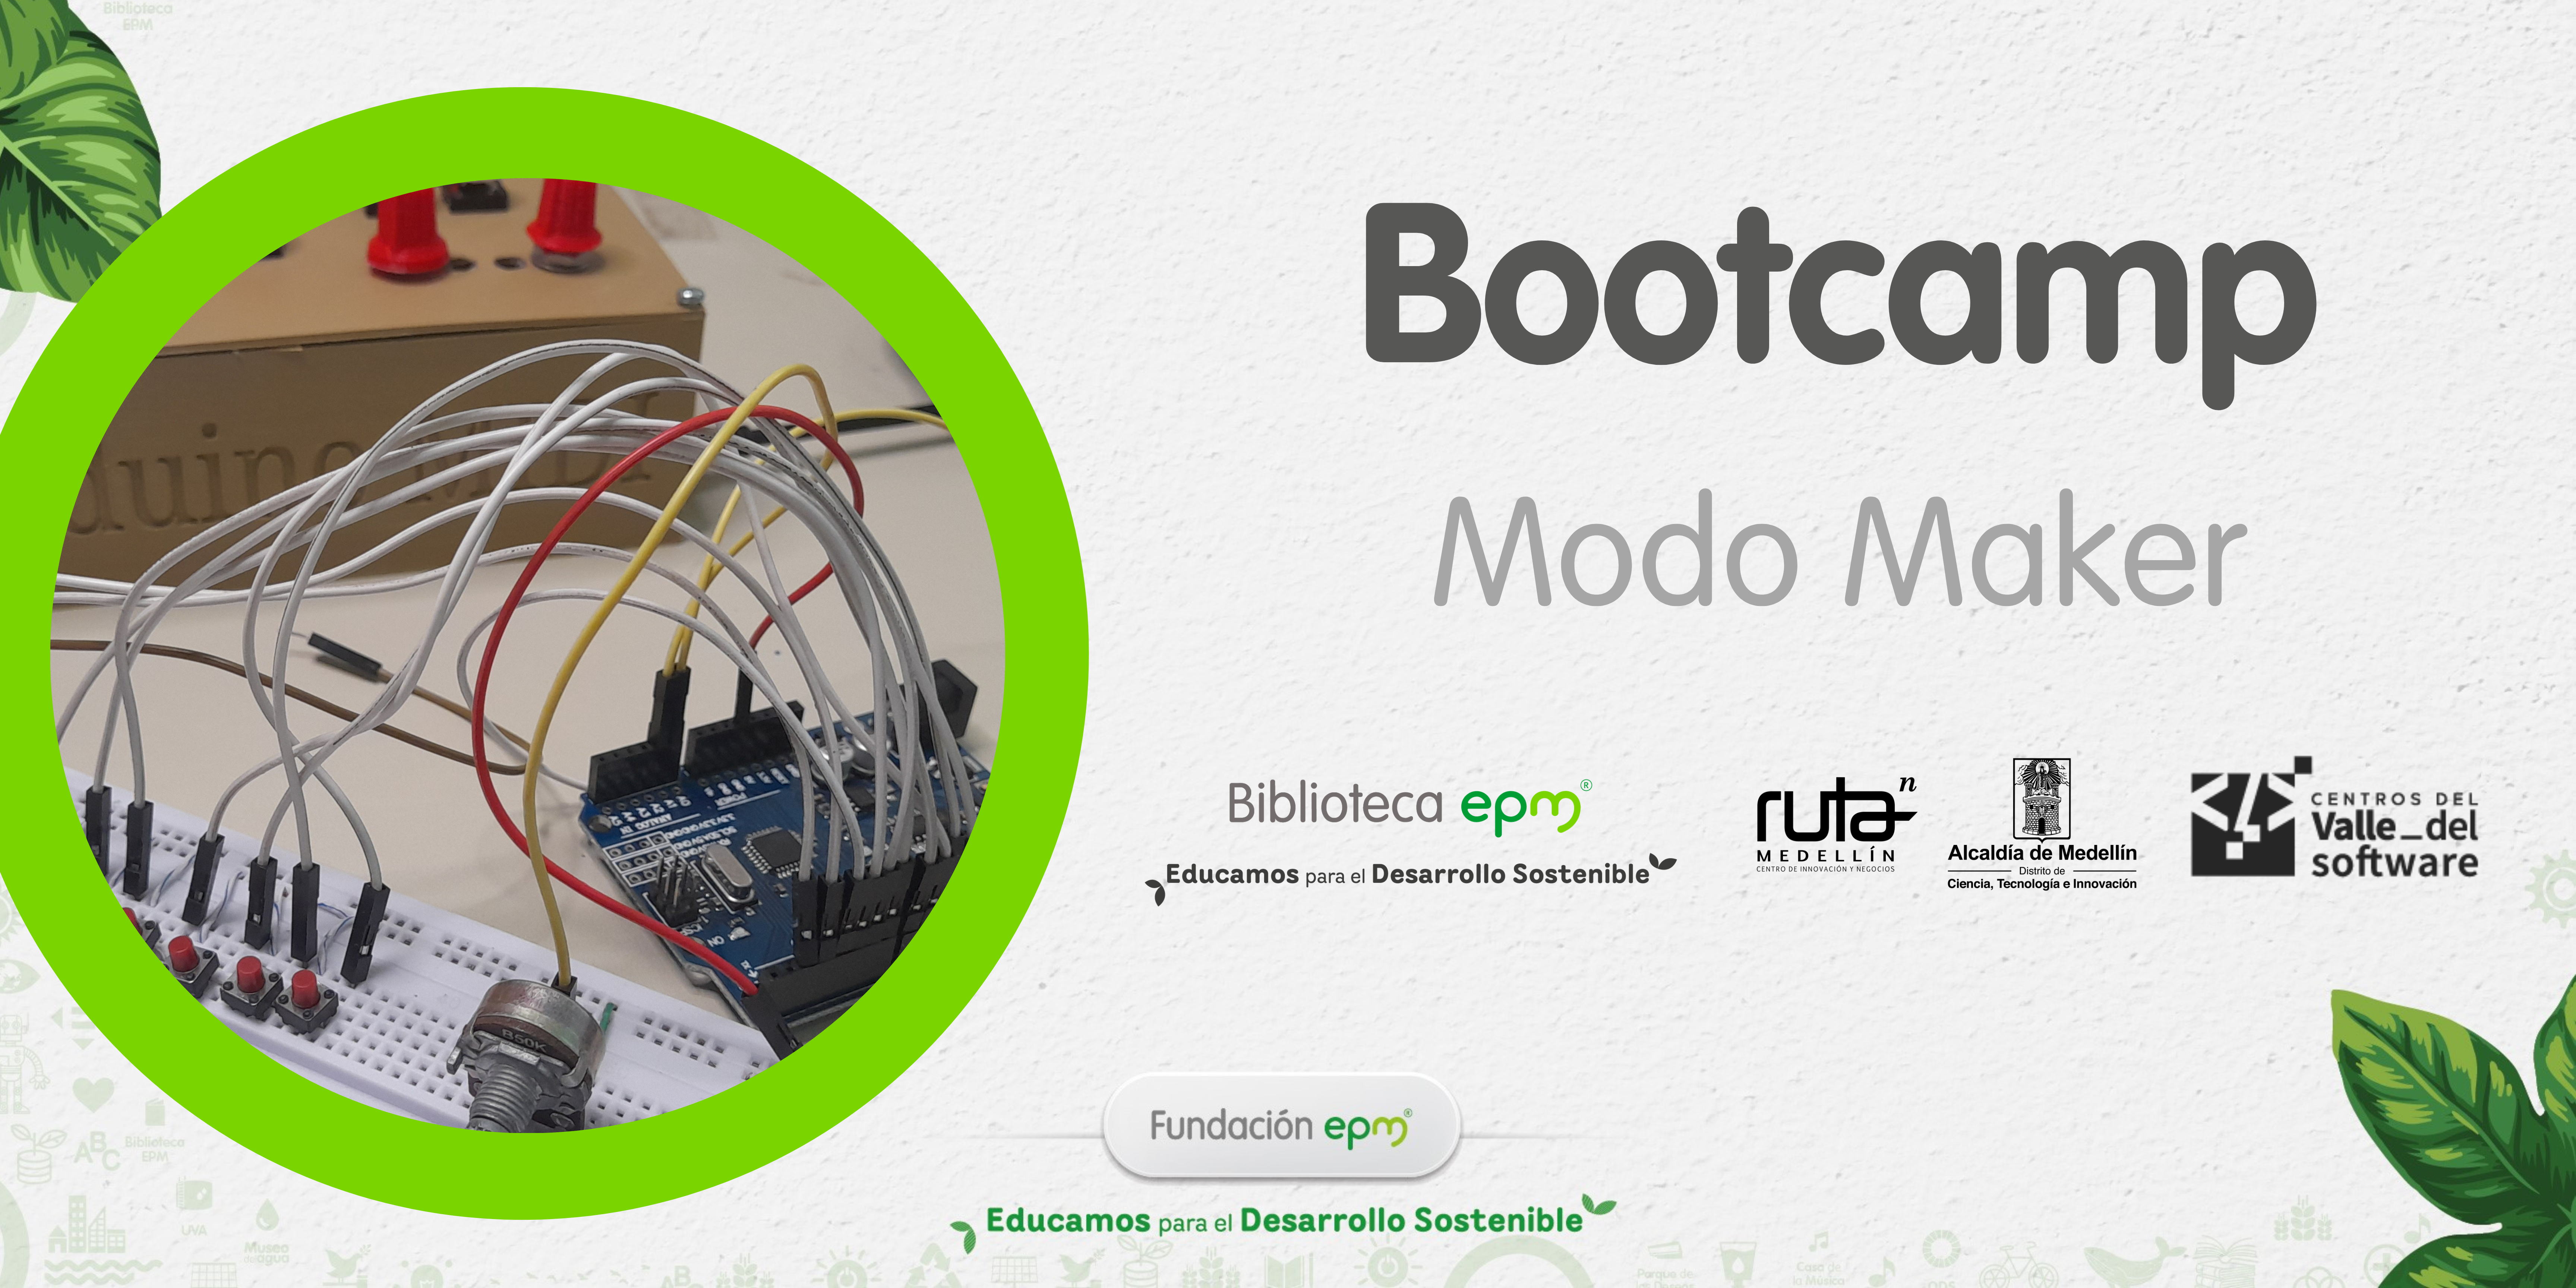 Bootcamp Modo Maker